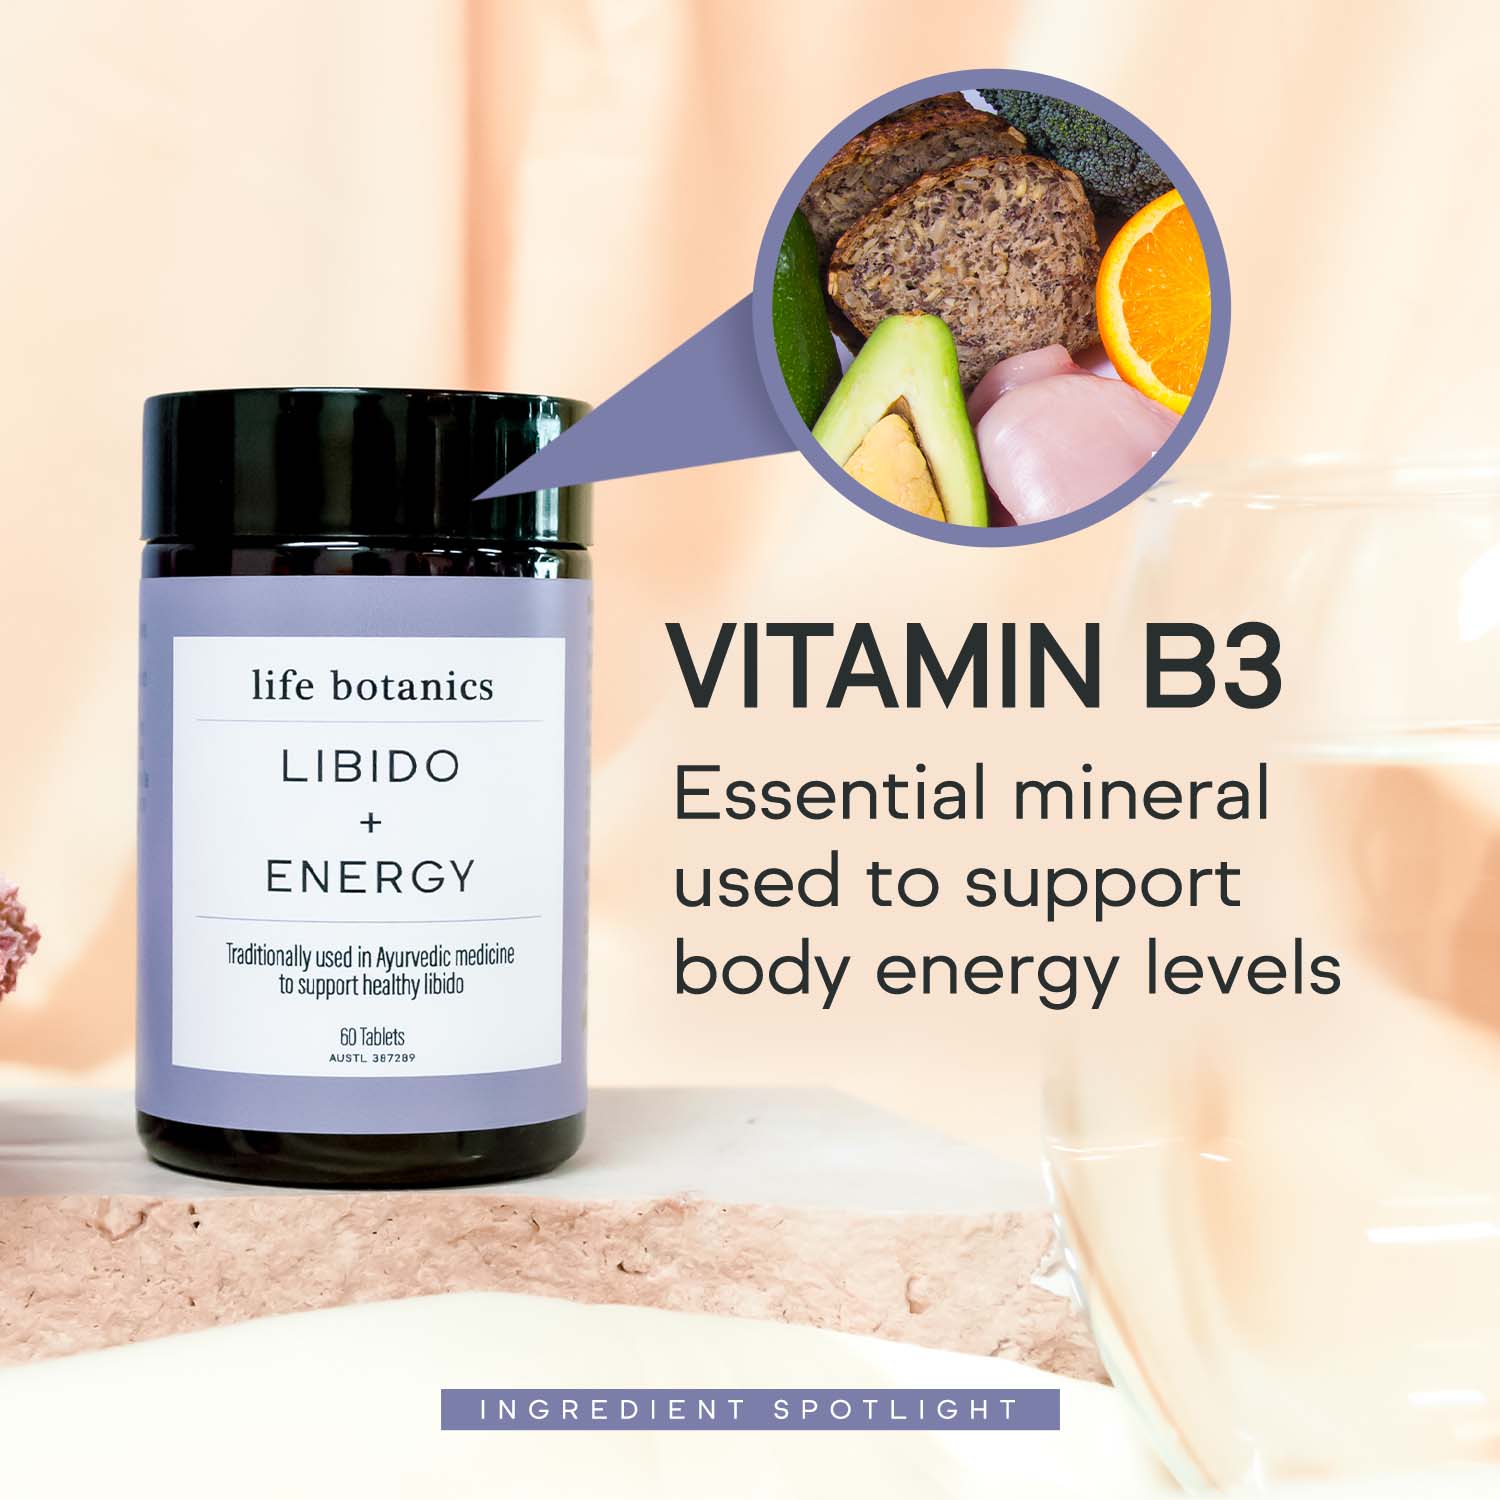 life botanics Libido + Energy Vitamin B3